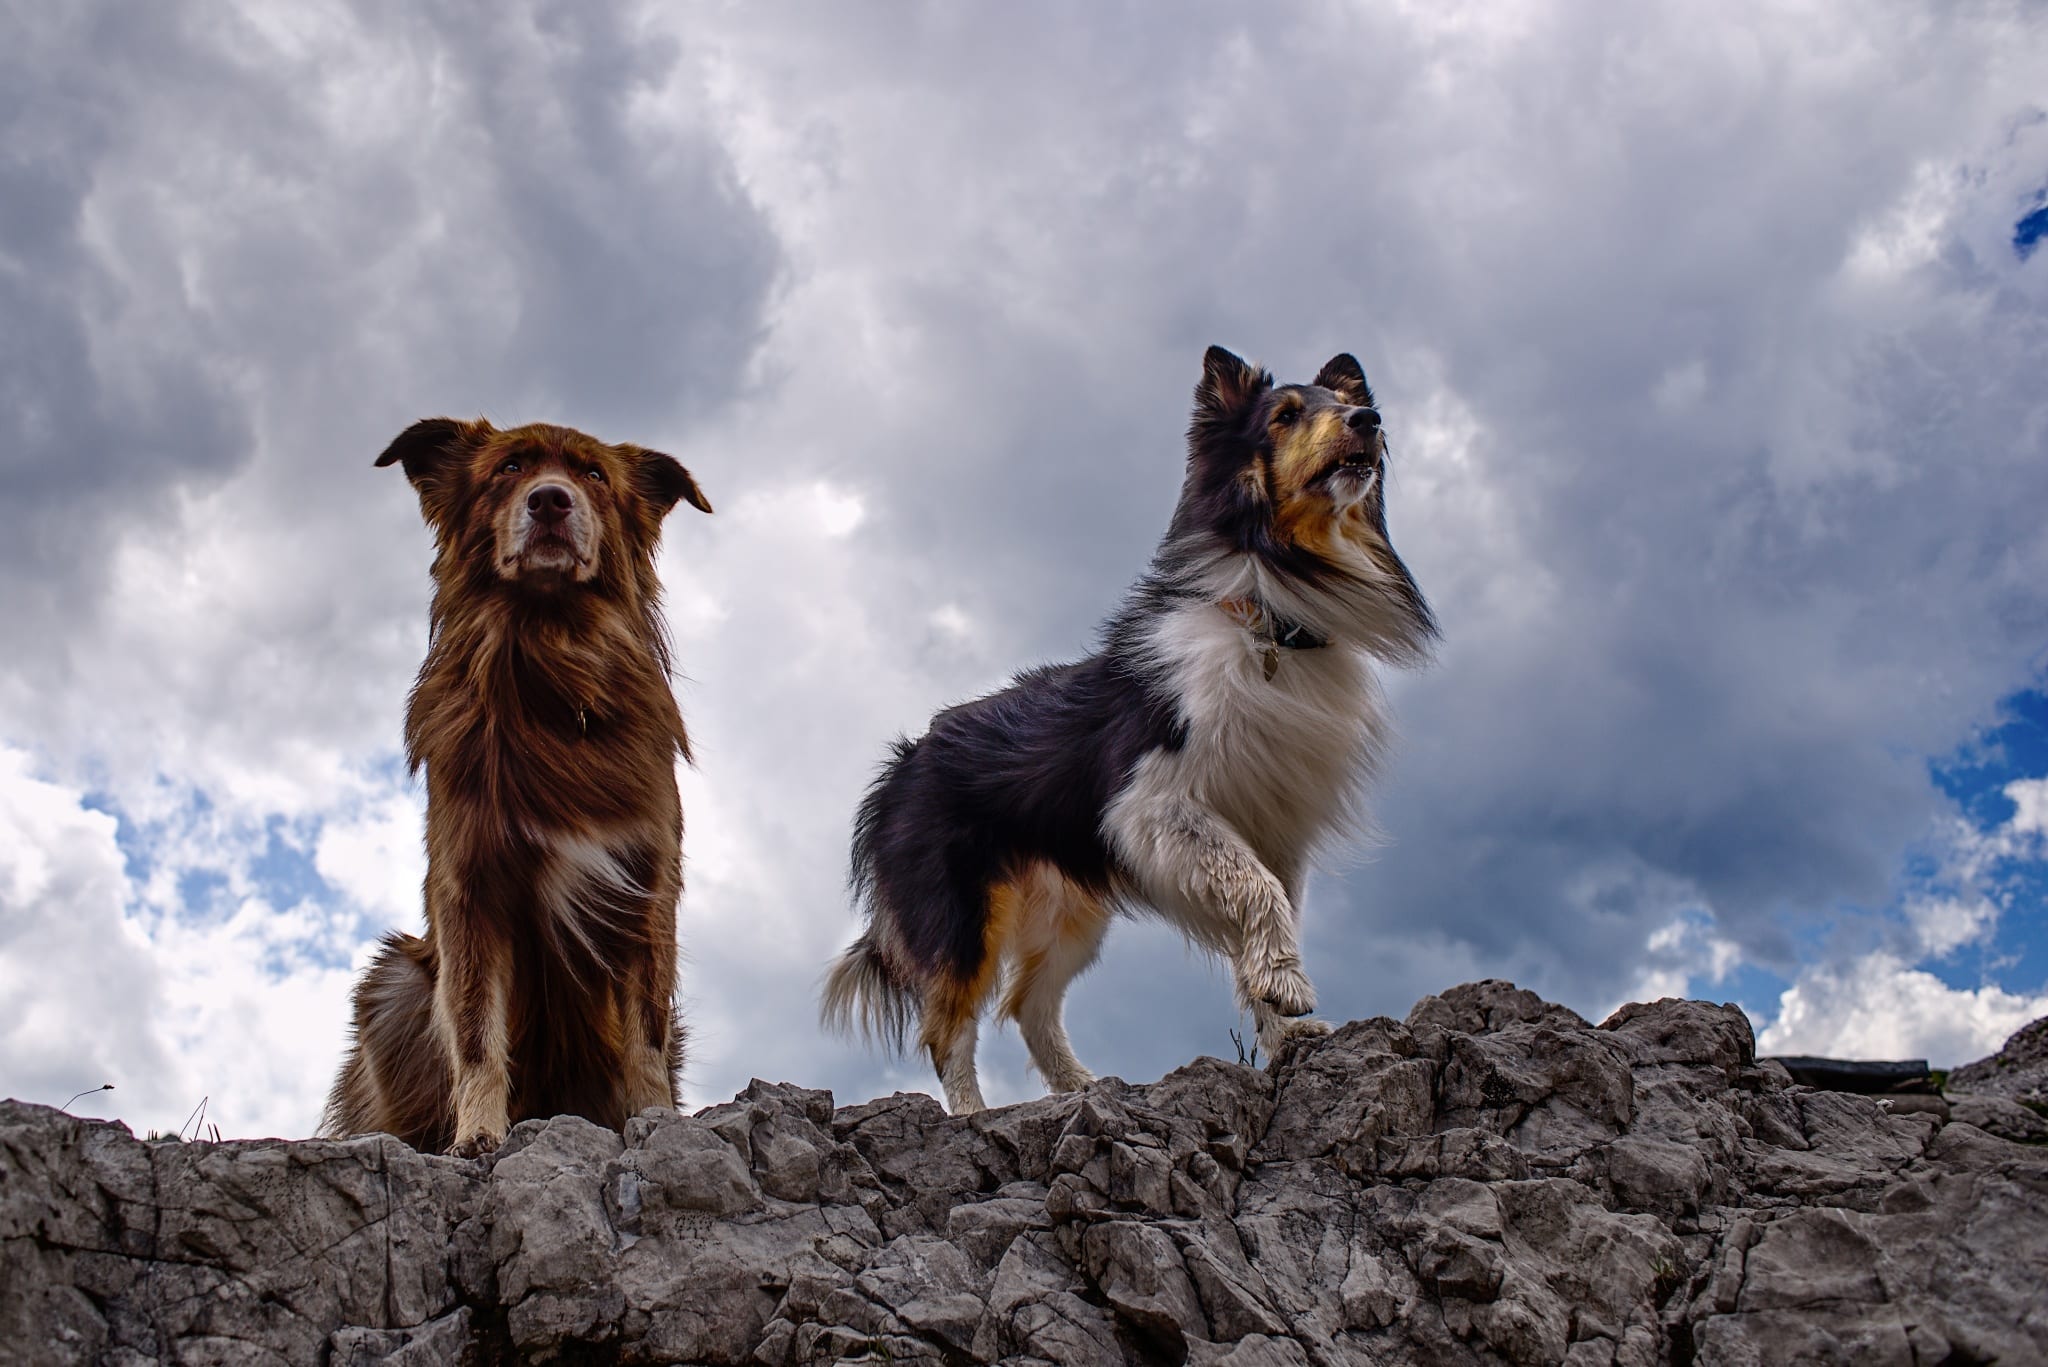 Míša Malá and Eliška Hrůzová agree that dog photography is not always easy